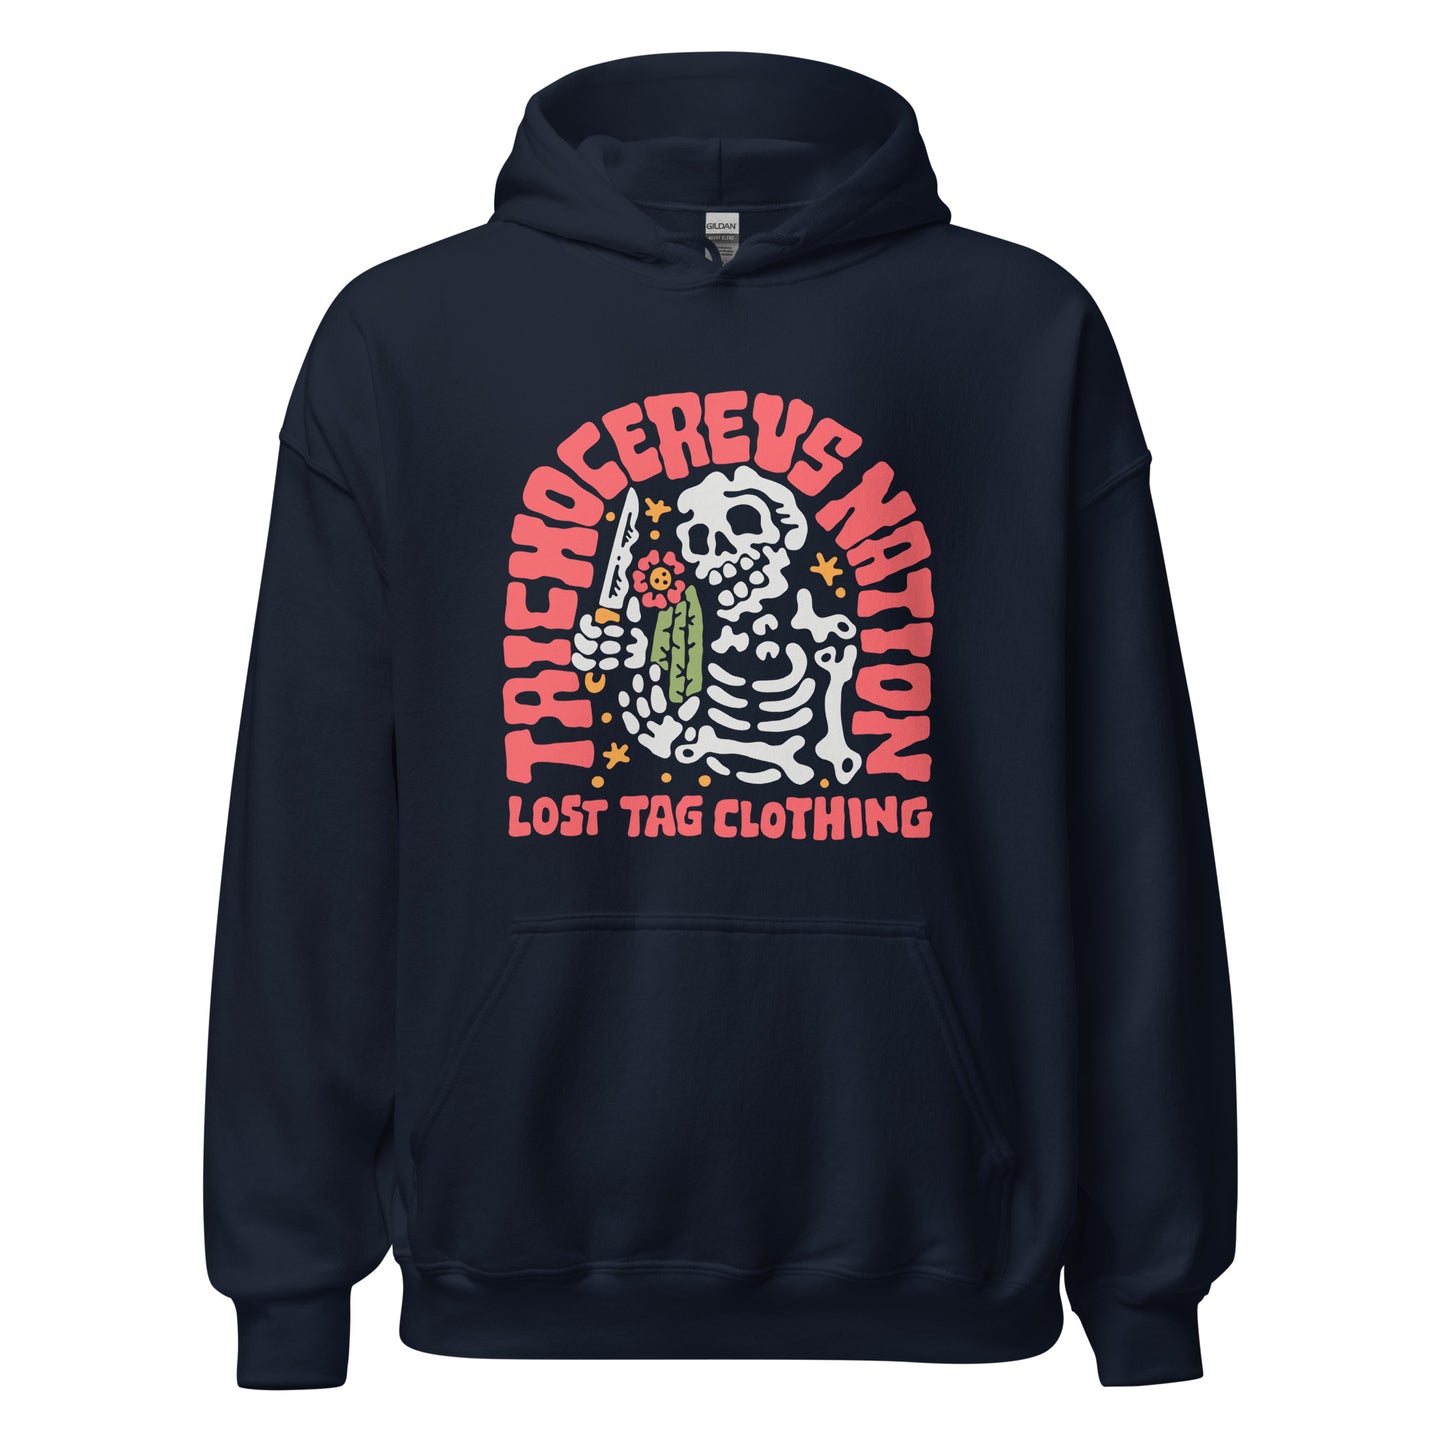 Tricho Nation unisex hoodie